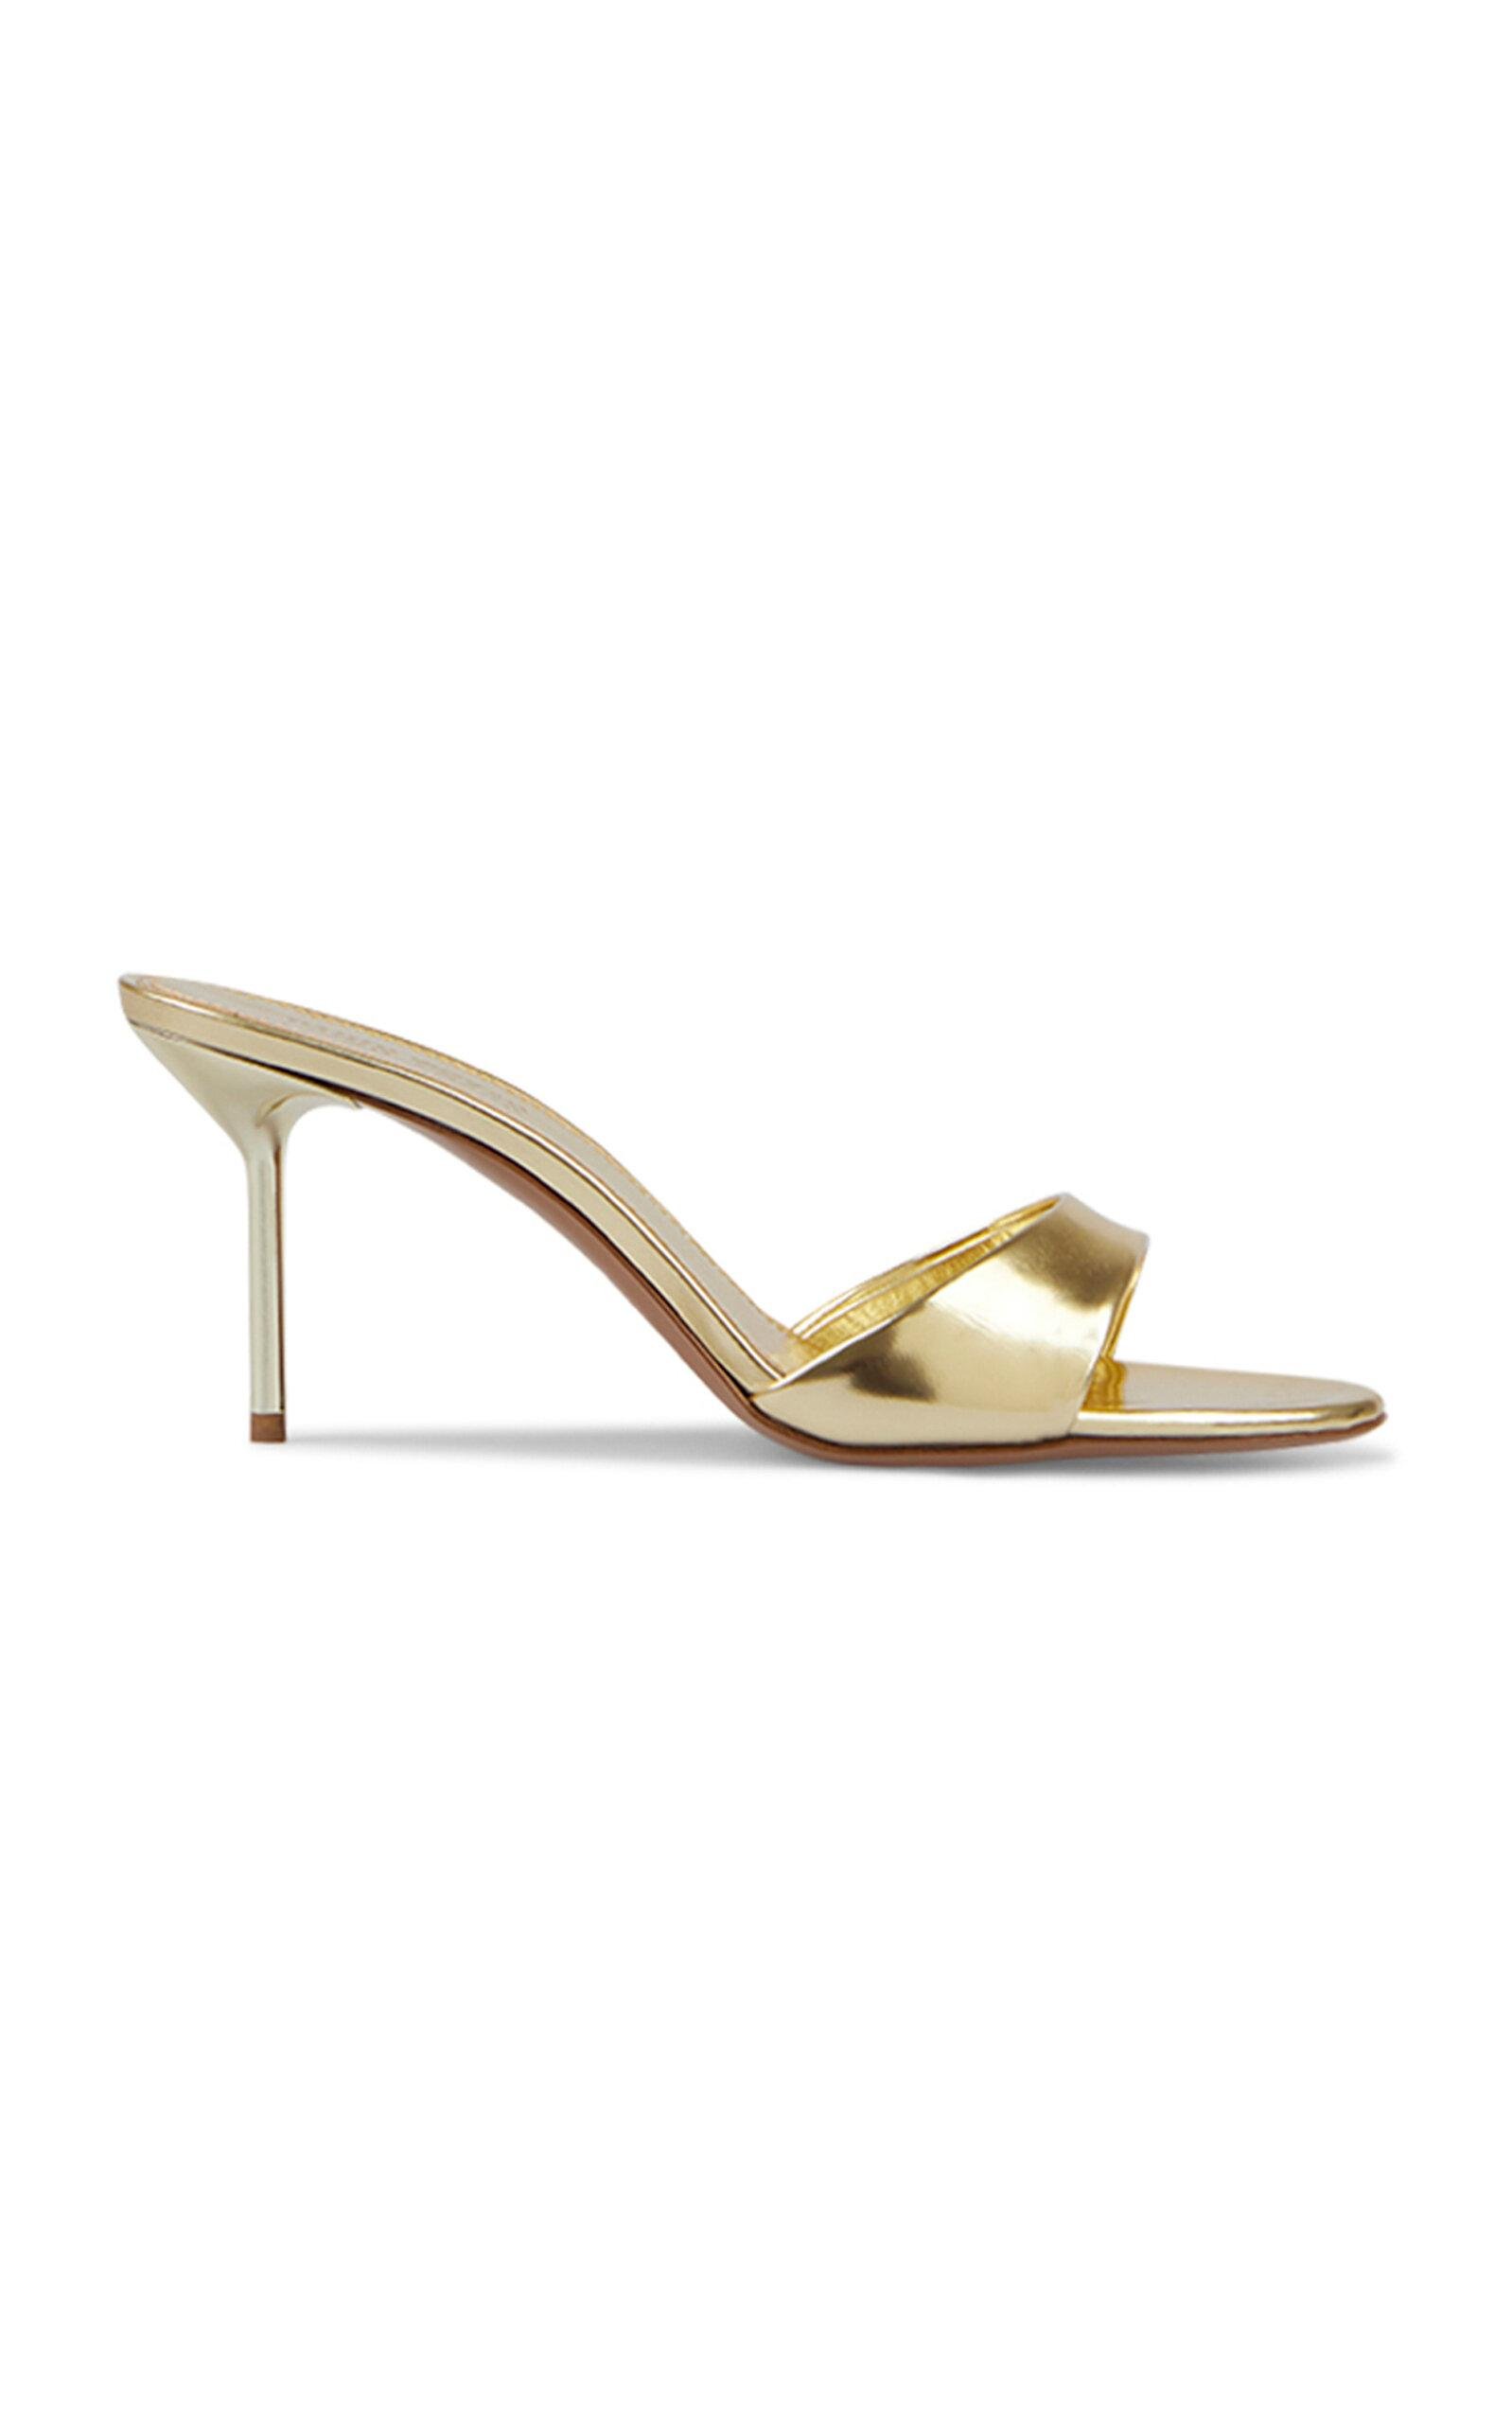 Paris Texas - Lidia Patent Leather Sandals - Gold - IT 38 - Moda Operandi by PARIS TEXAS